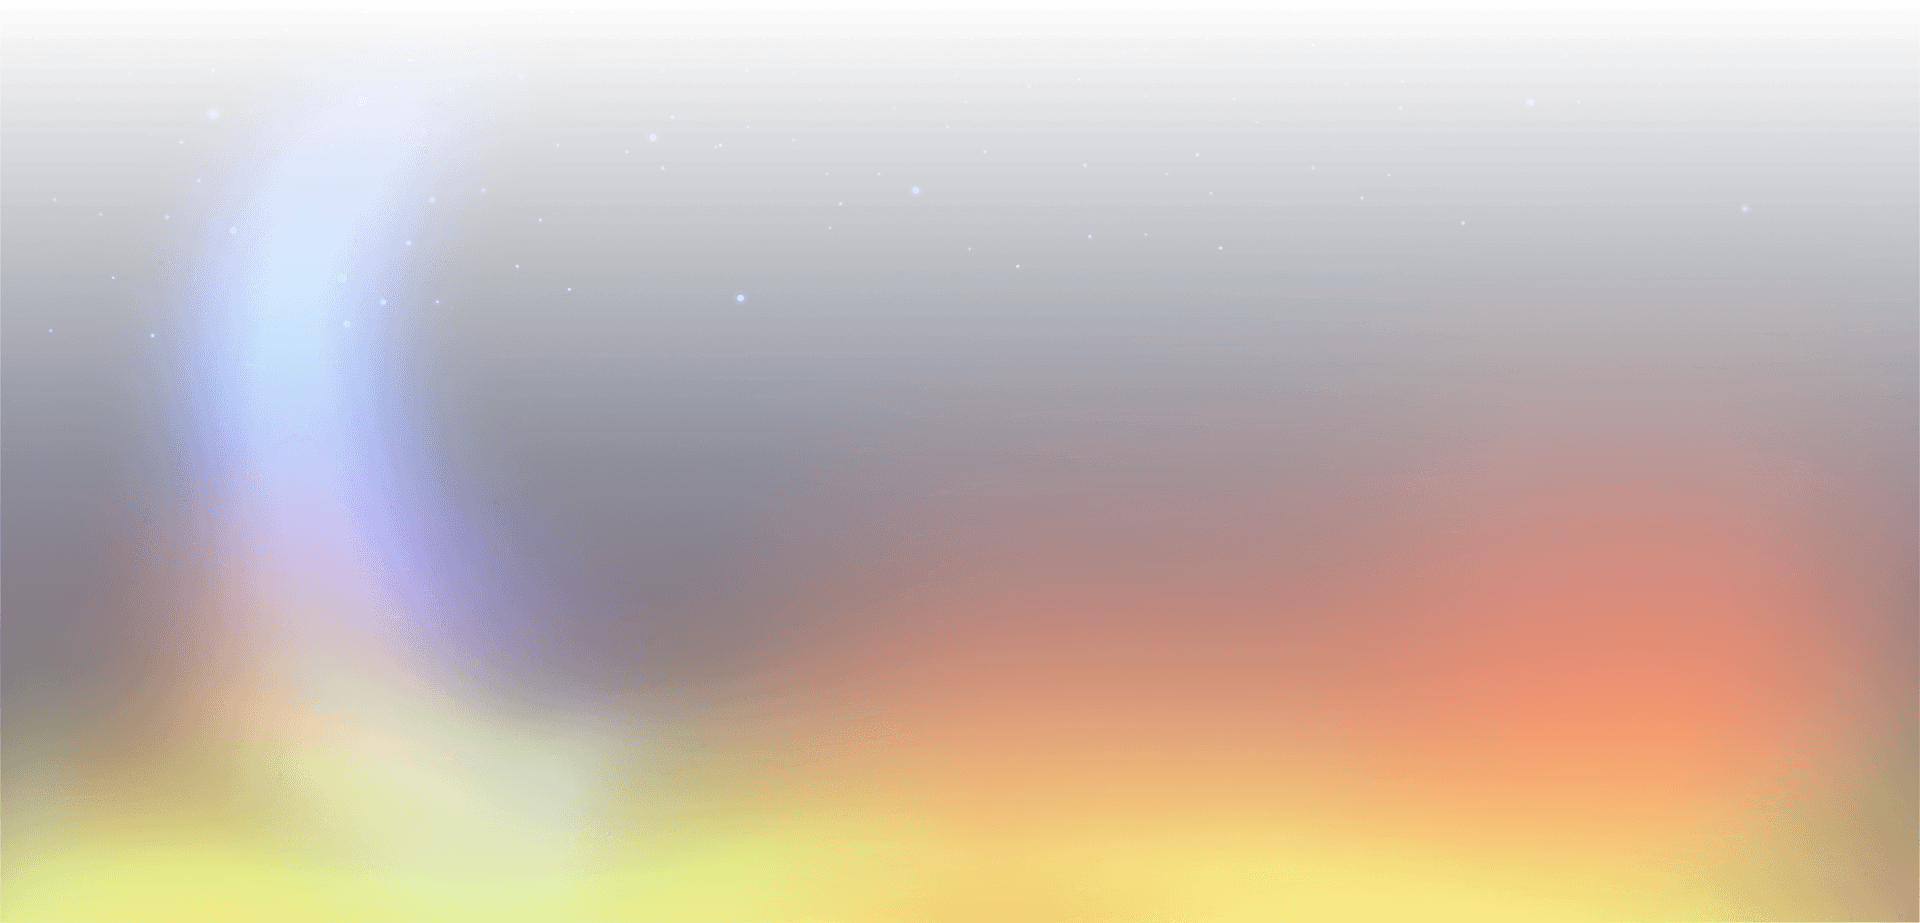 Blue and orange aurora and starfield